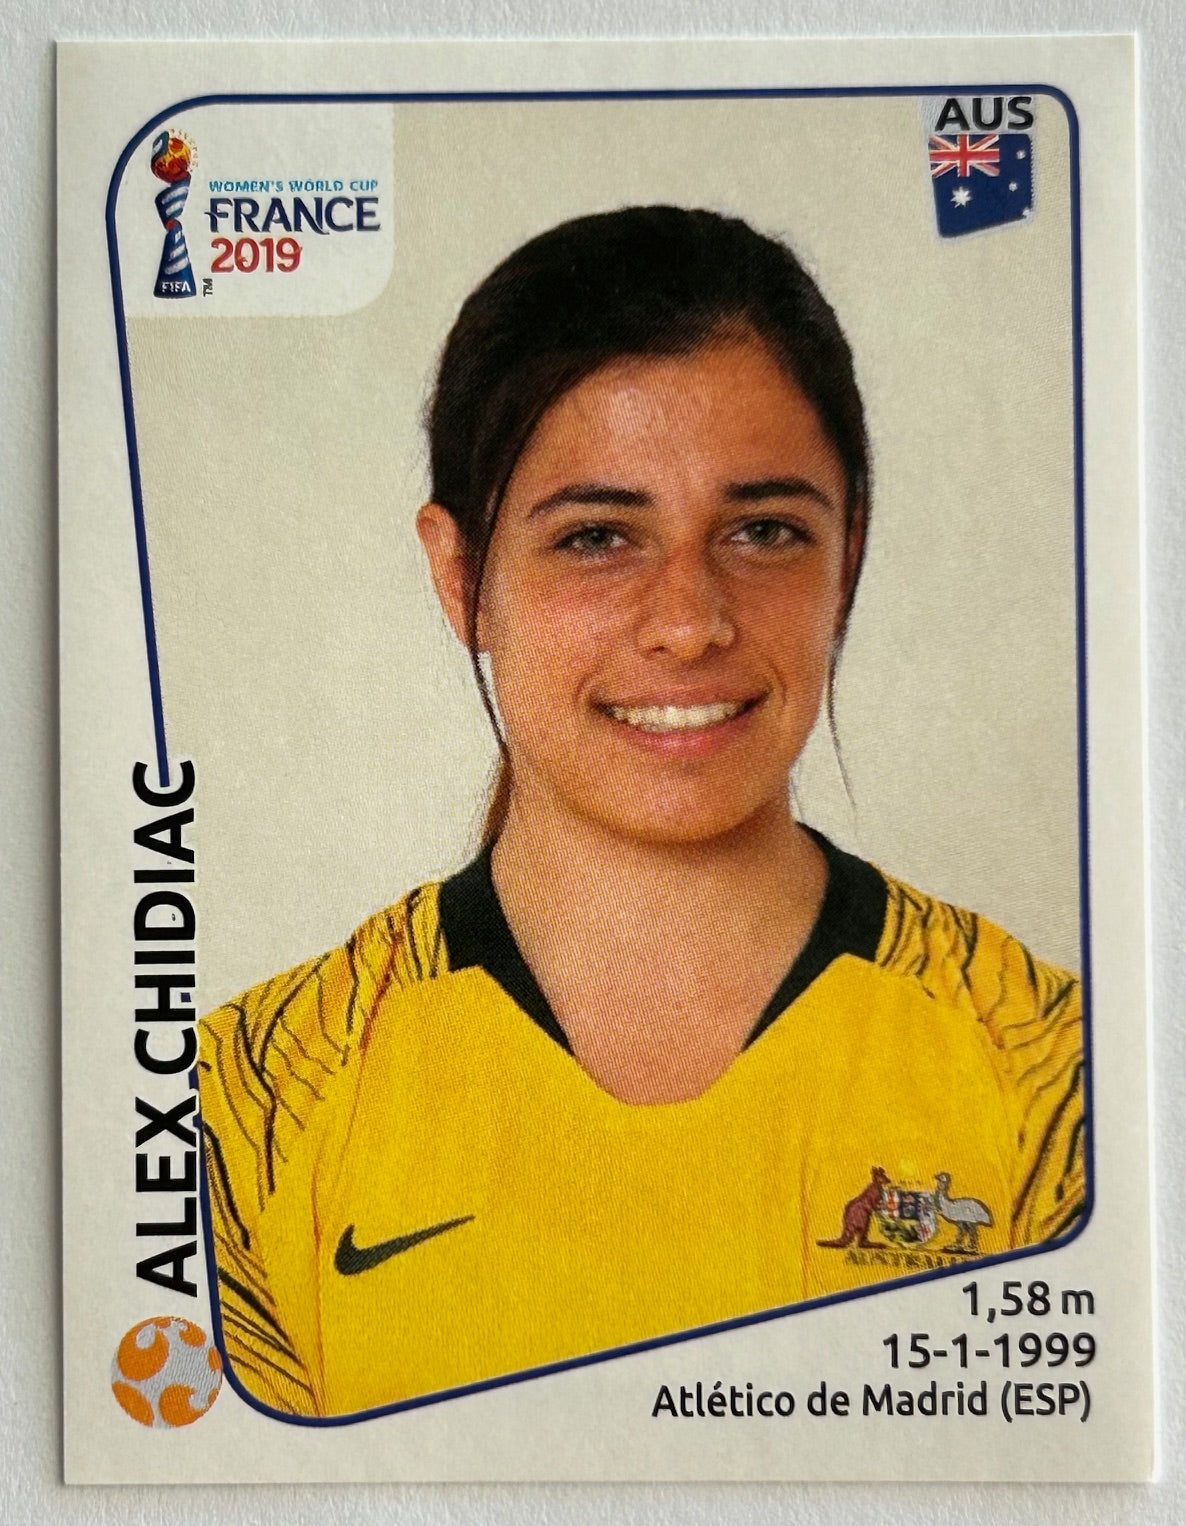 Panini FIFA Women's World Cup France 2019 - ALEX CHIDIAC (AUSTRALIA) Rookie RC Sticker #183